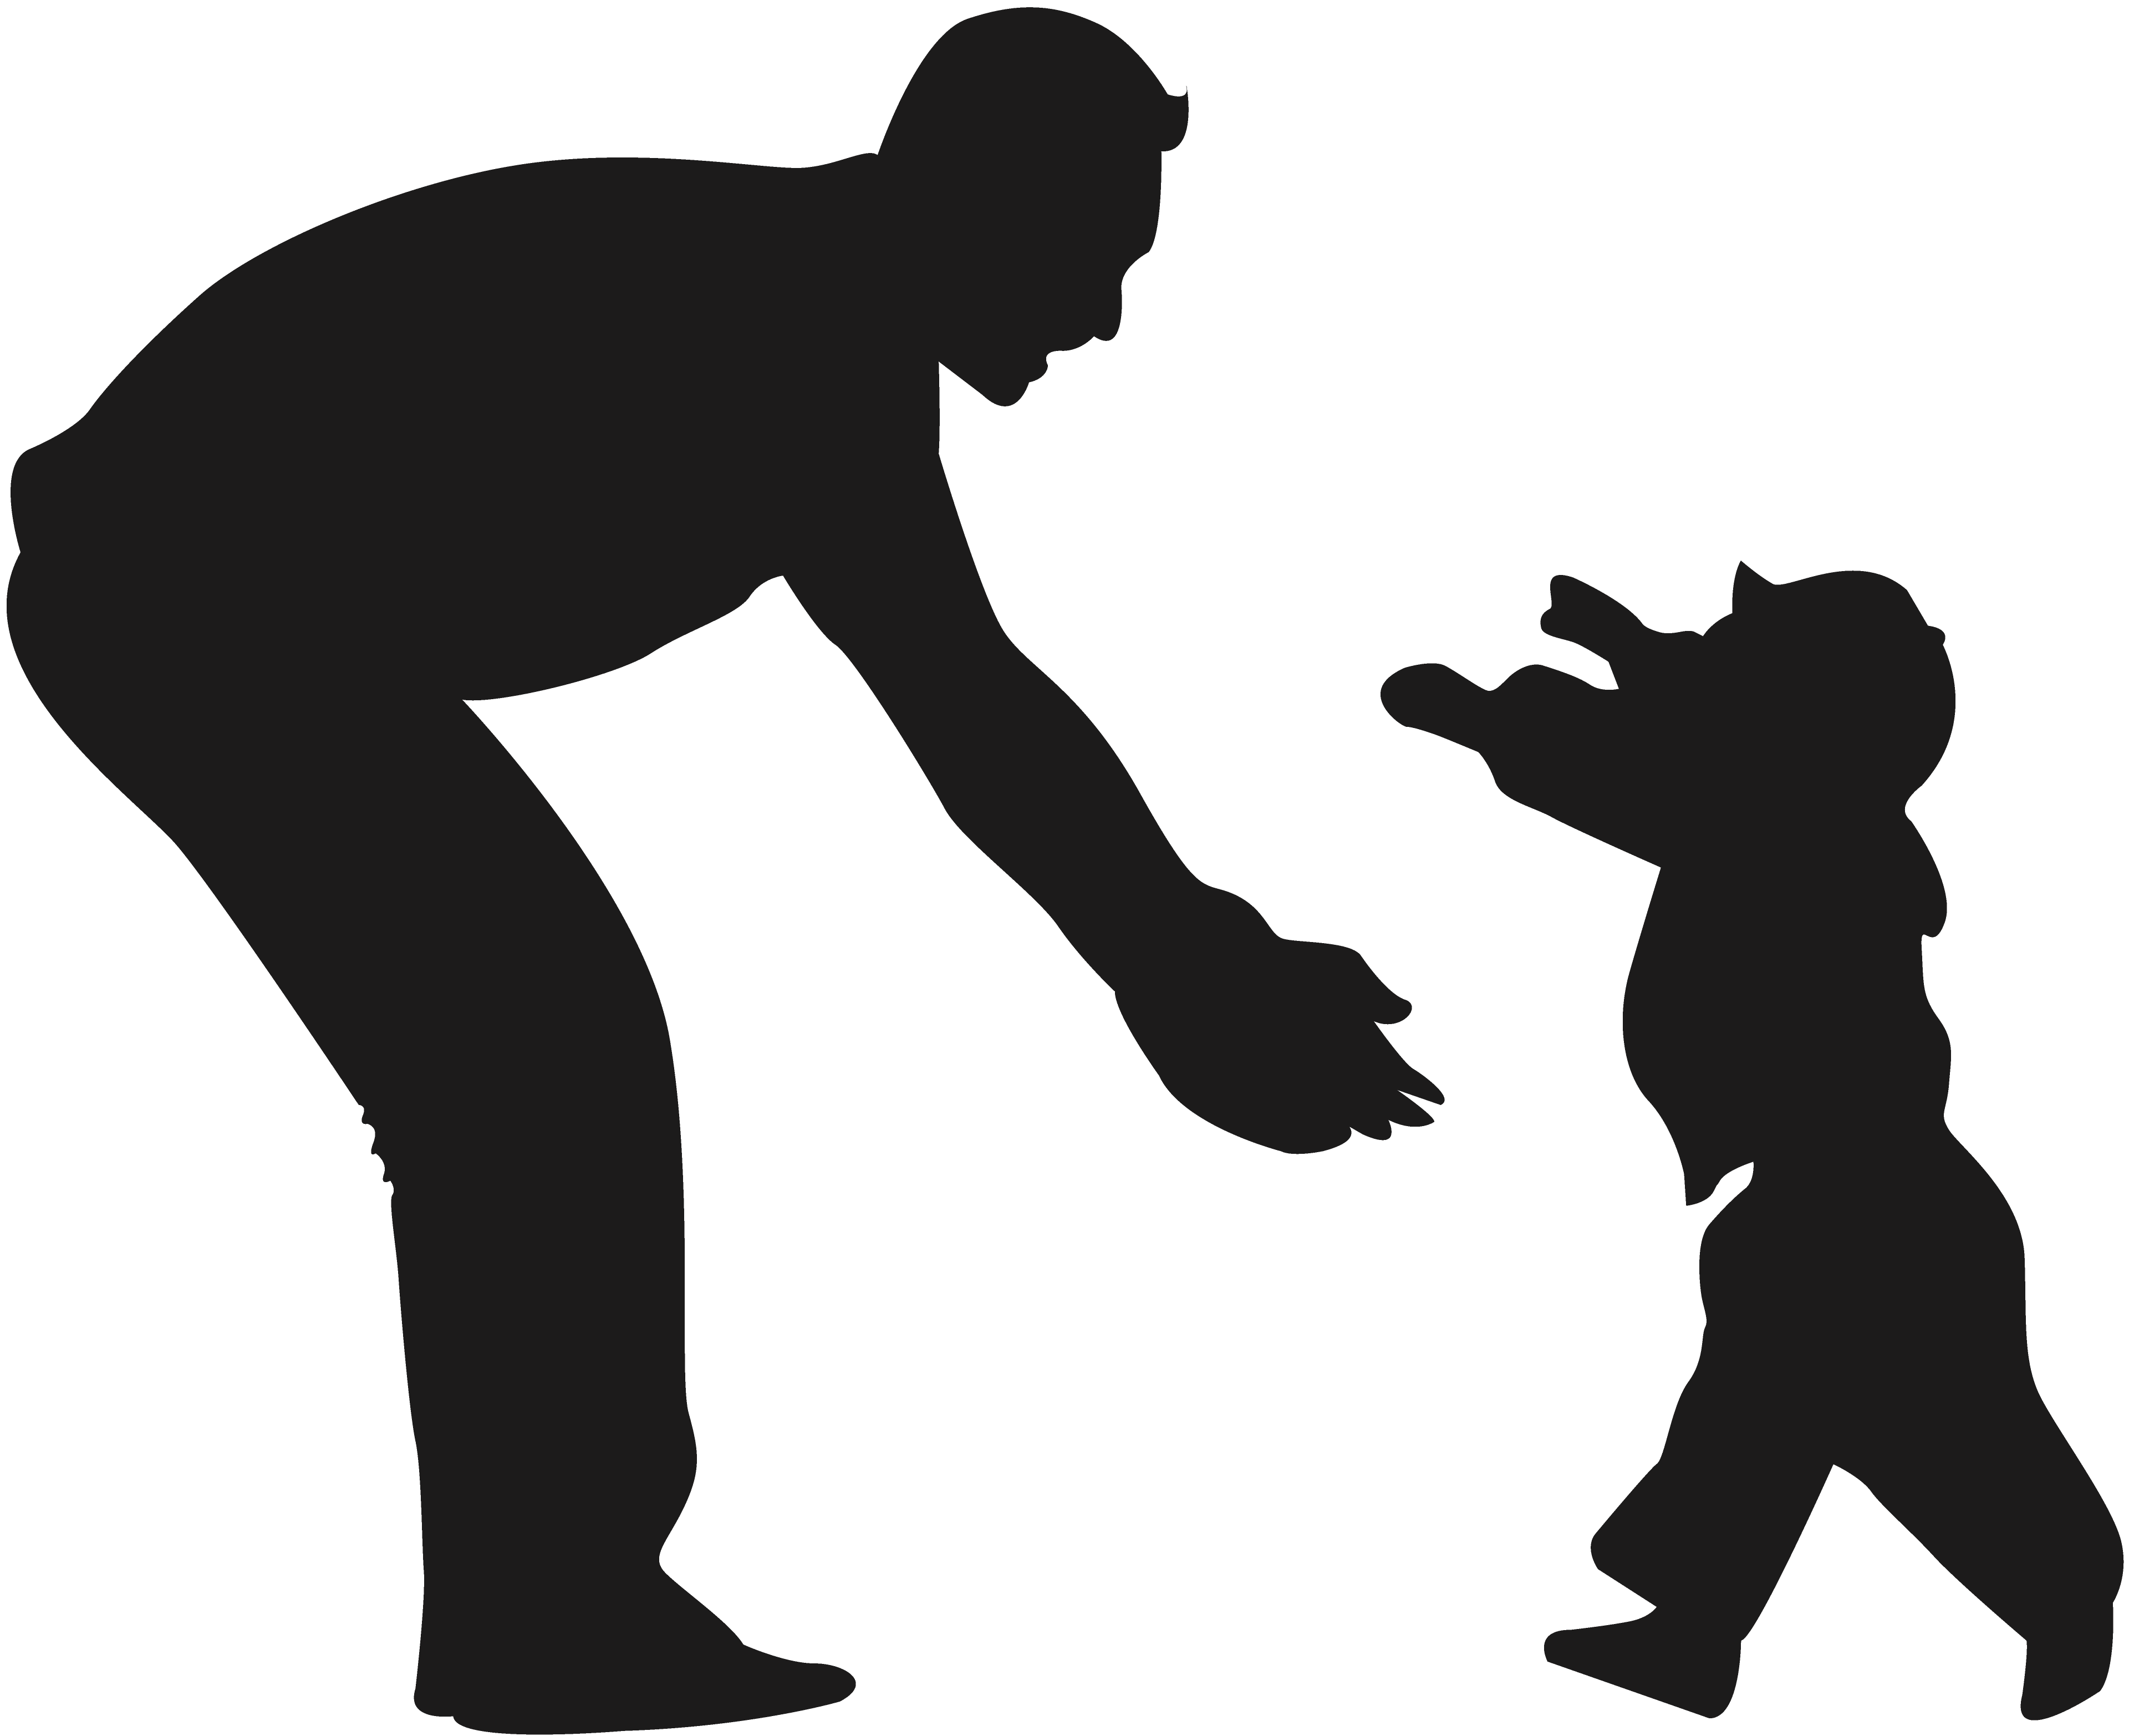 Download Standing Human Father Son Behavior Child HQ PNG Image FreePNGImg.